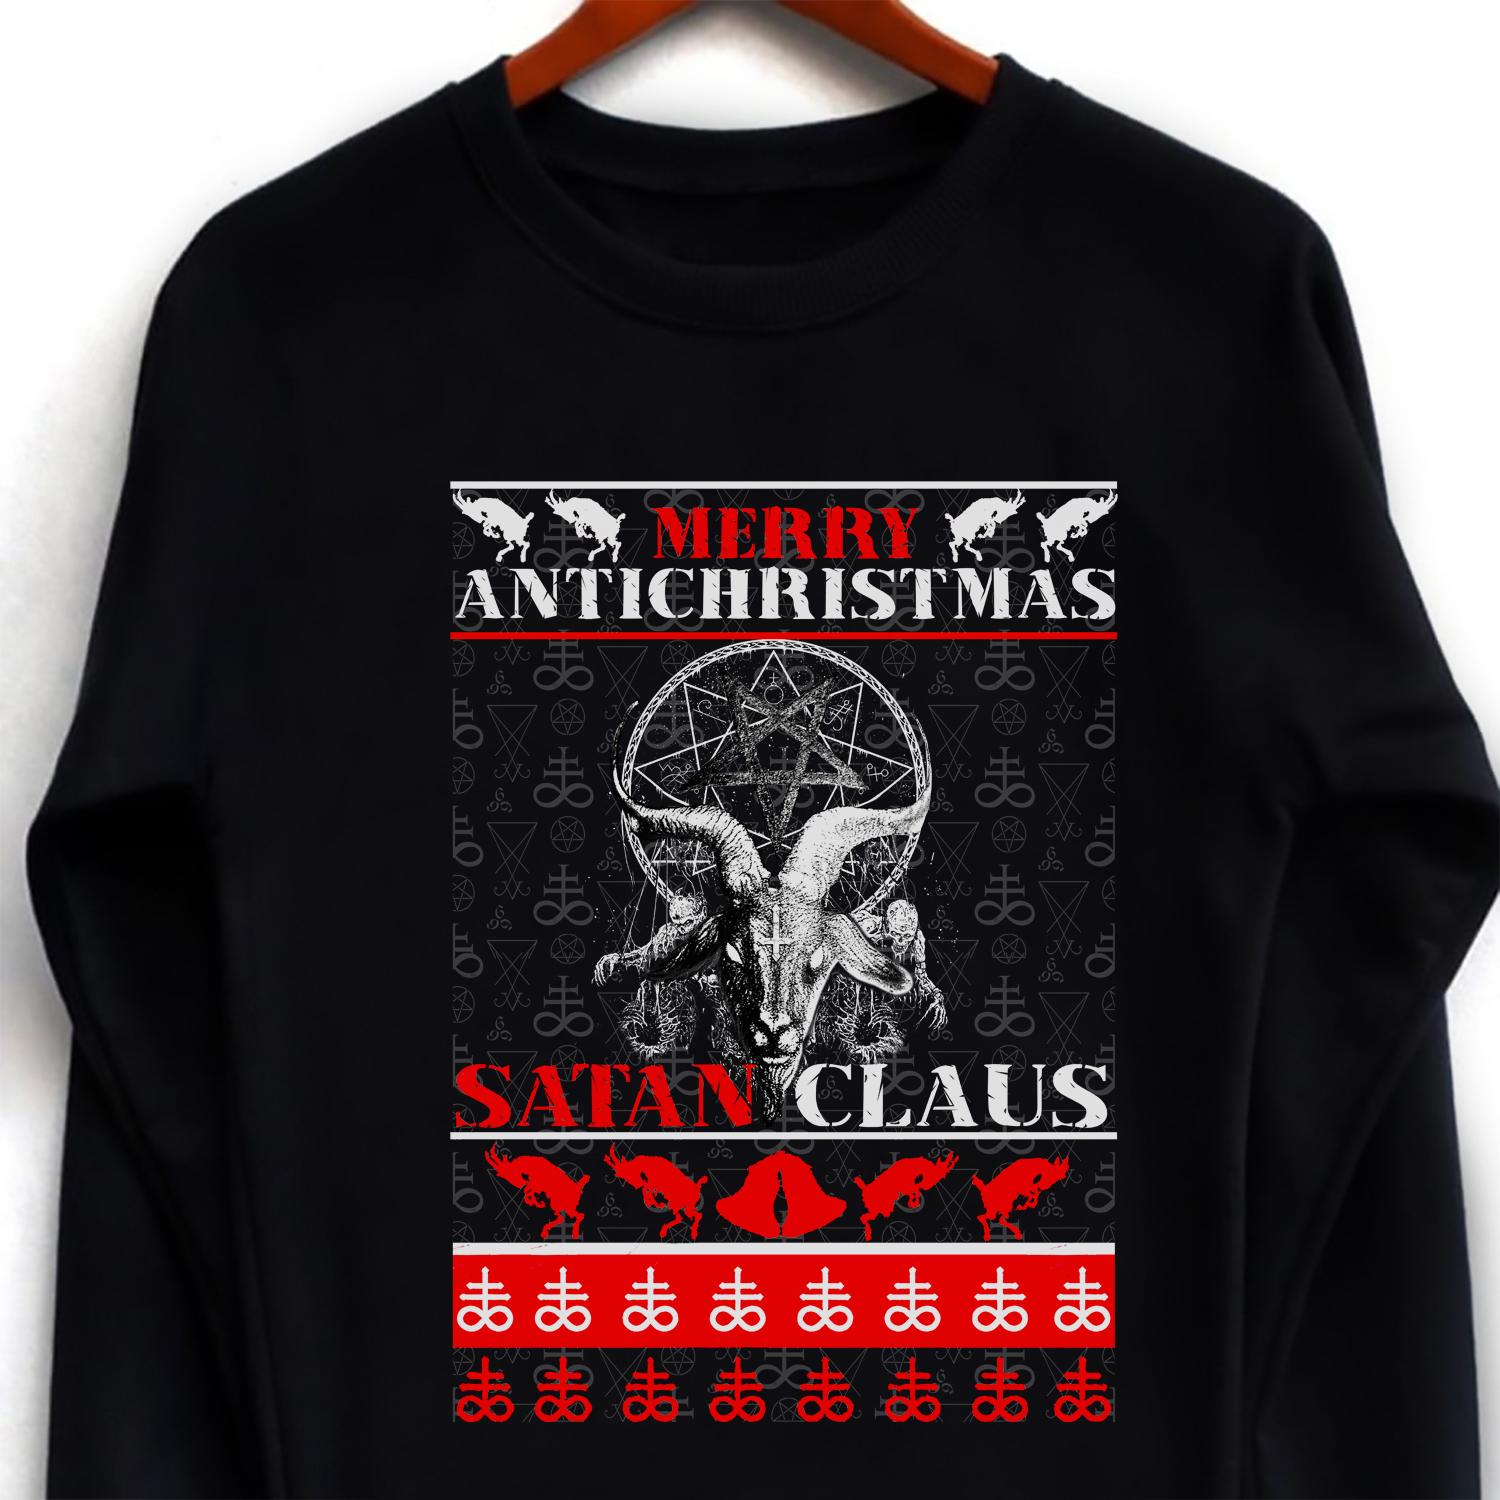 Merry Antichristmas Satan Claus - Hail Satan, Christmas day ugly sweater